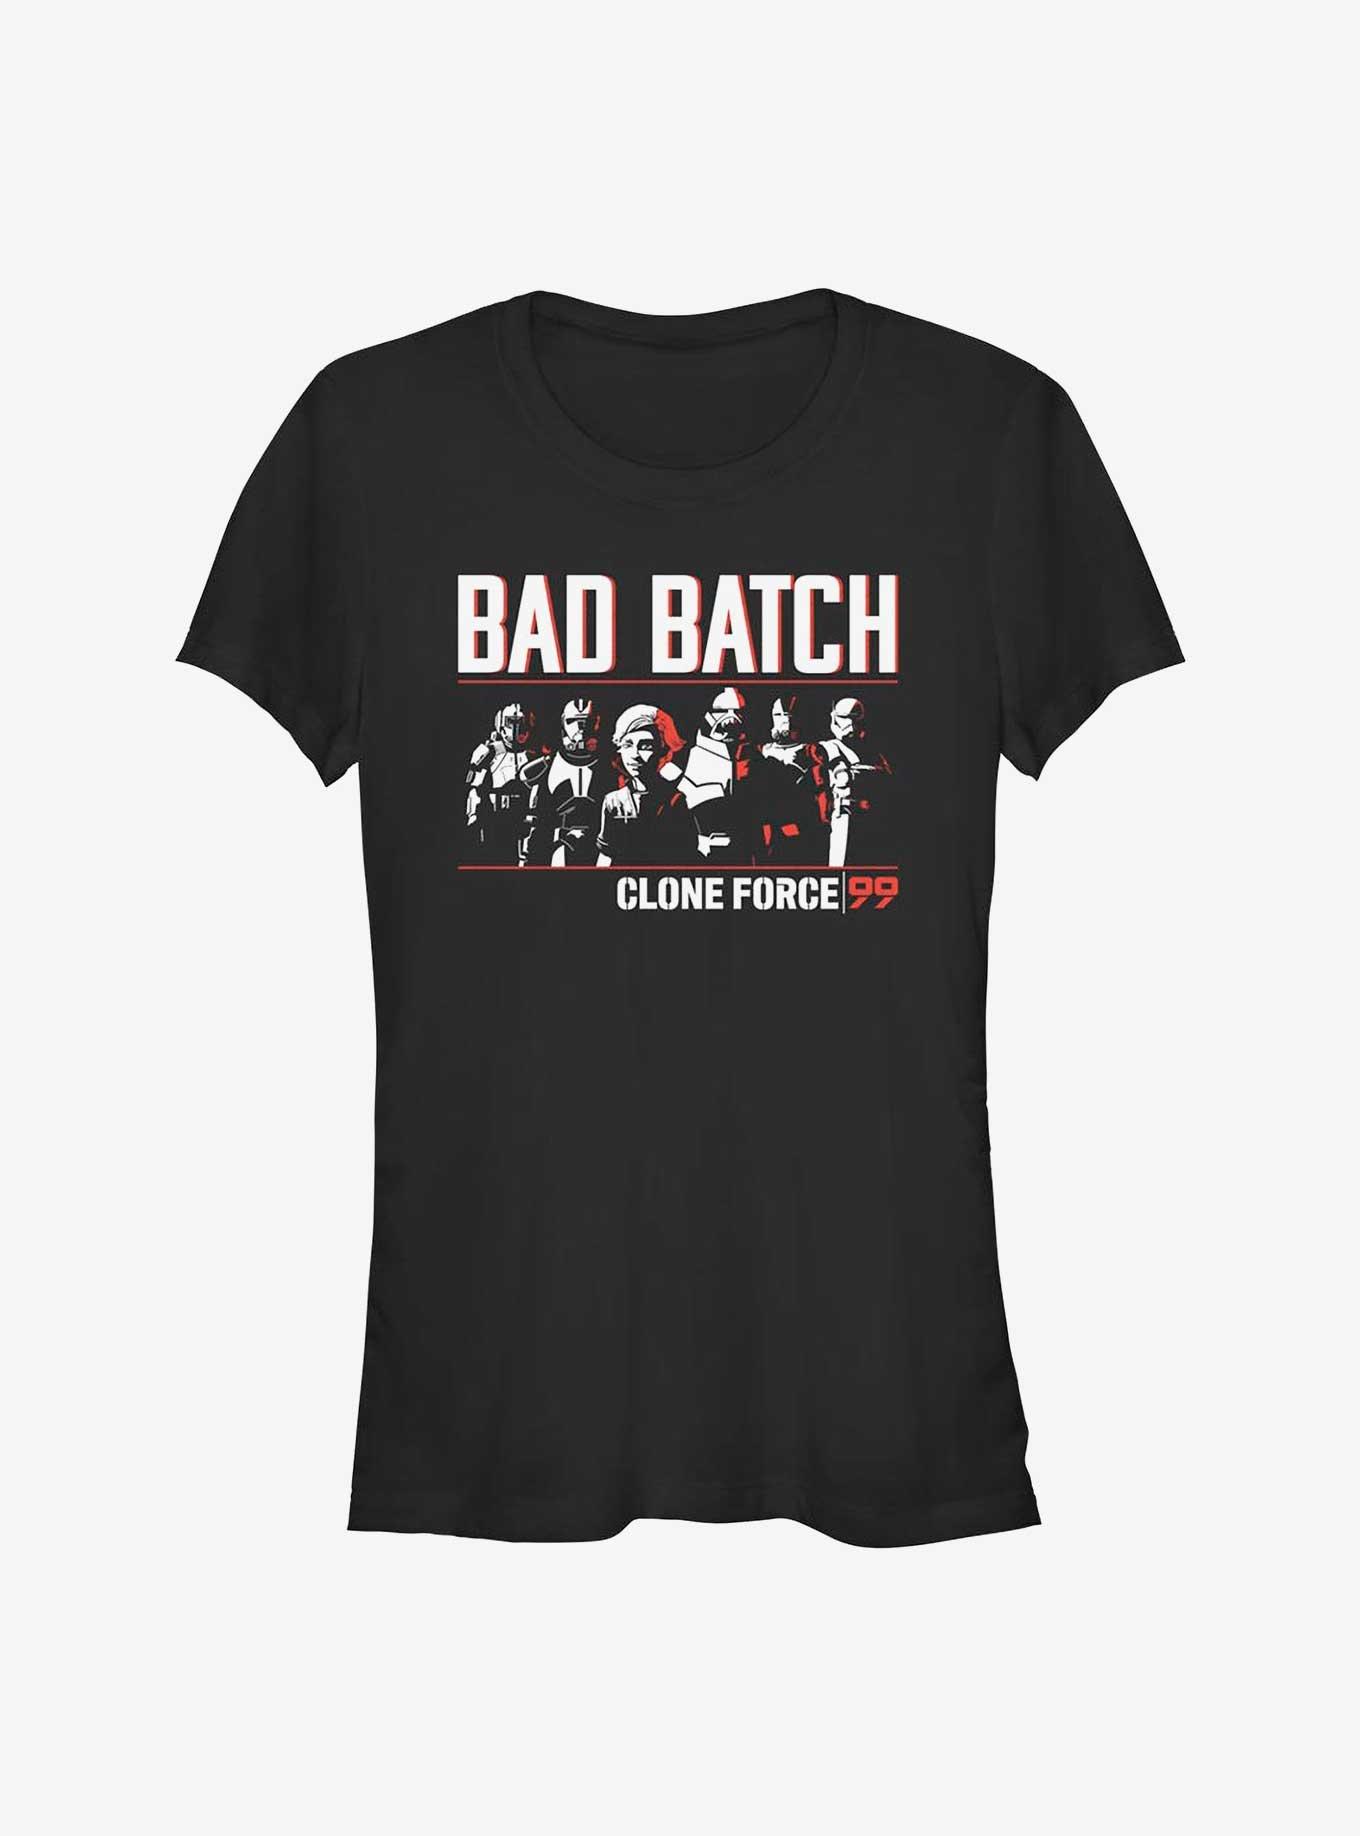 Star Wars: The Bad Batch Lineup Girls T-Shirt